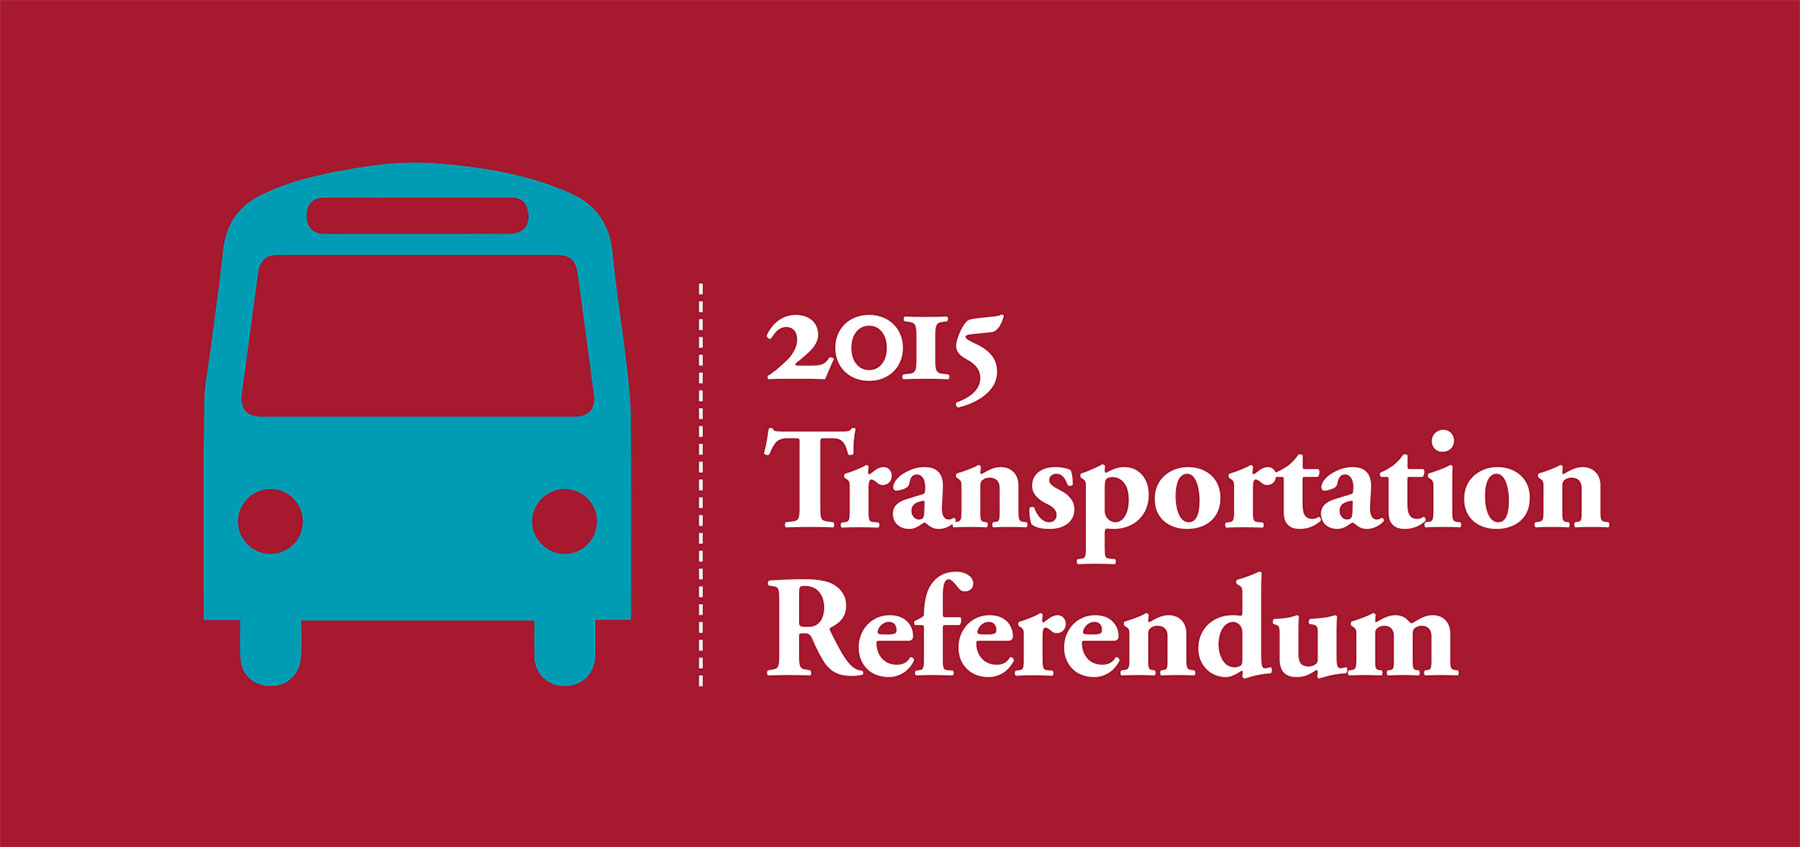 2015 Transportation Referendum